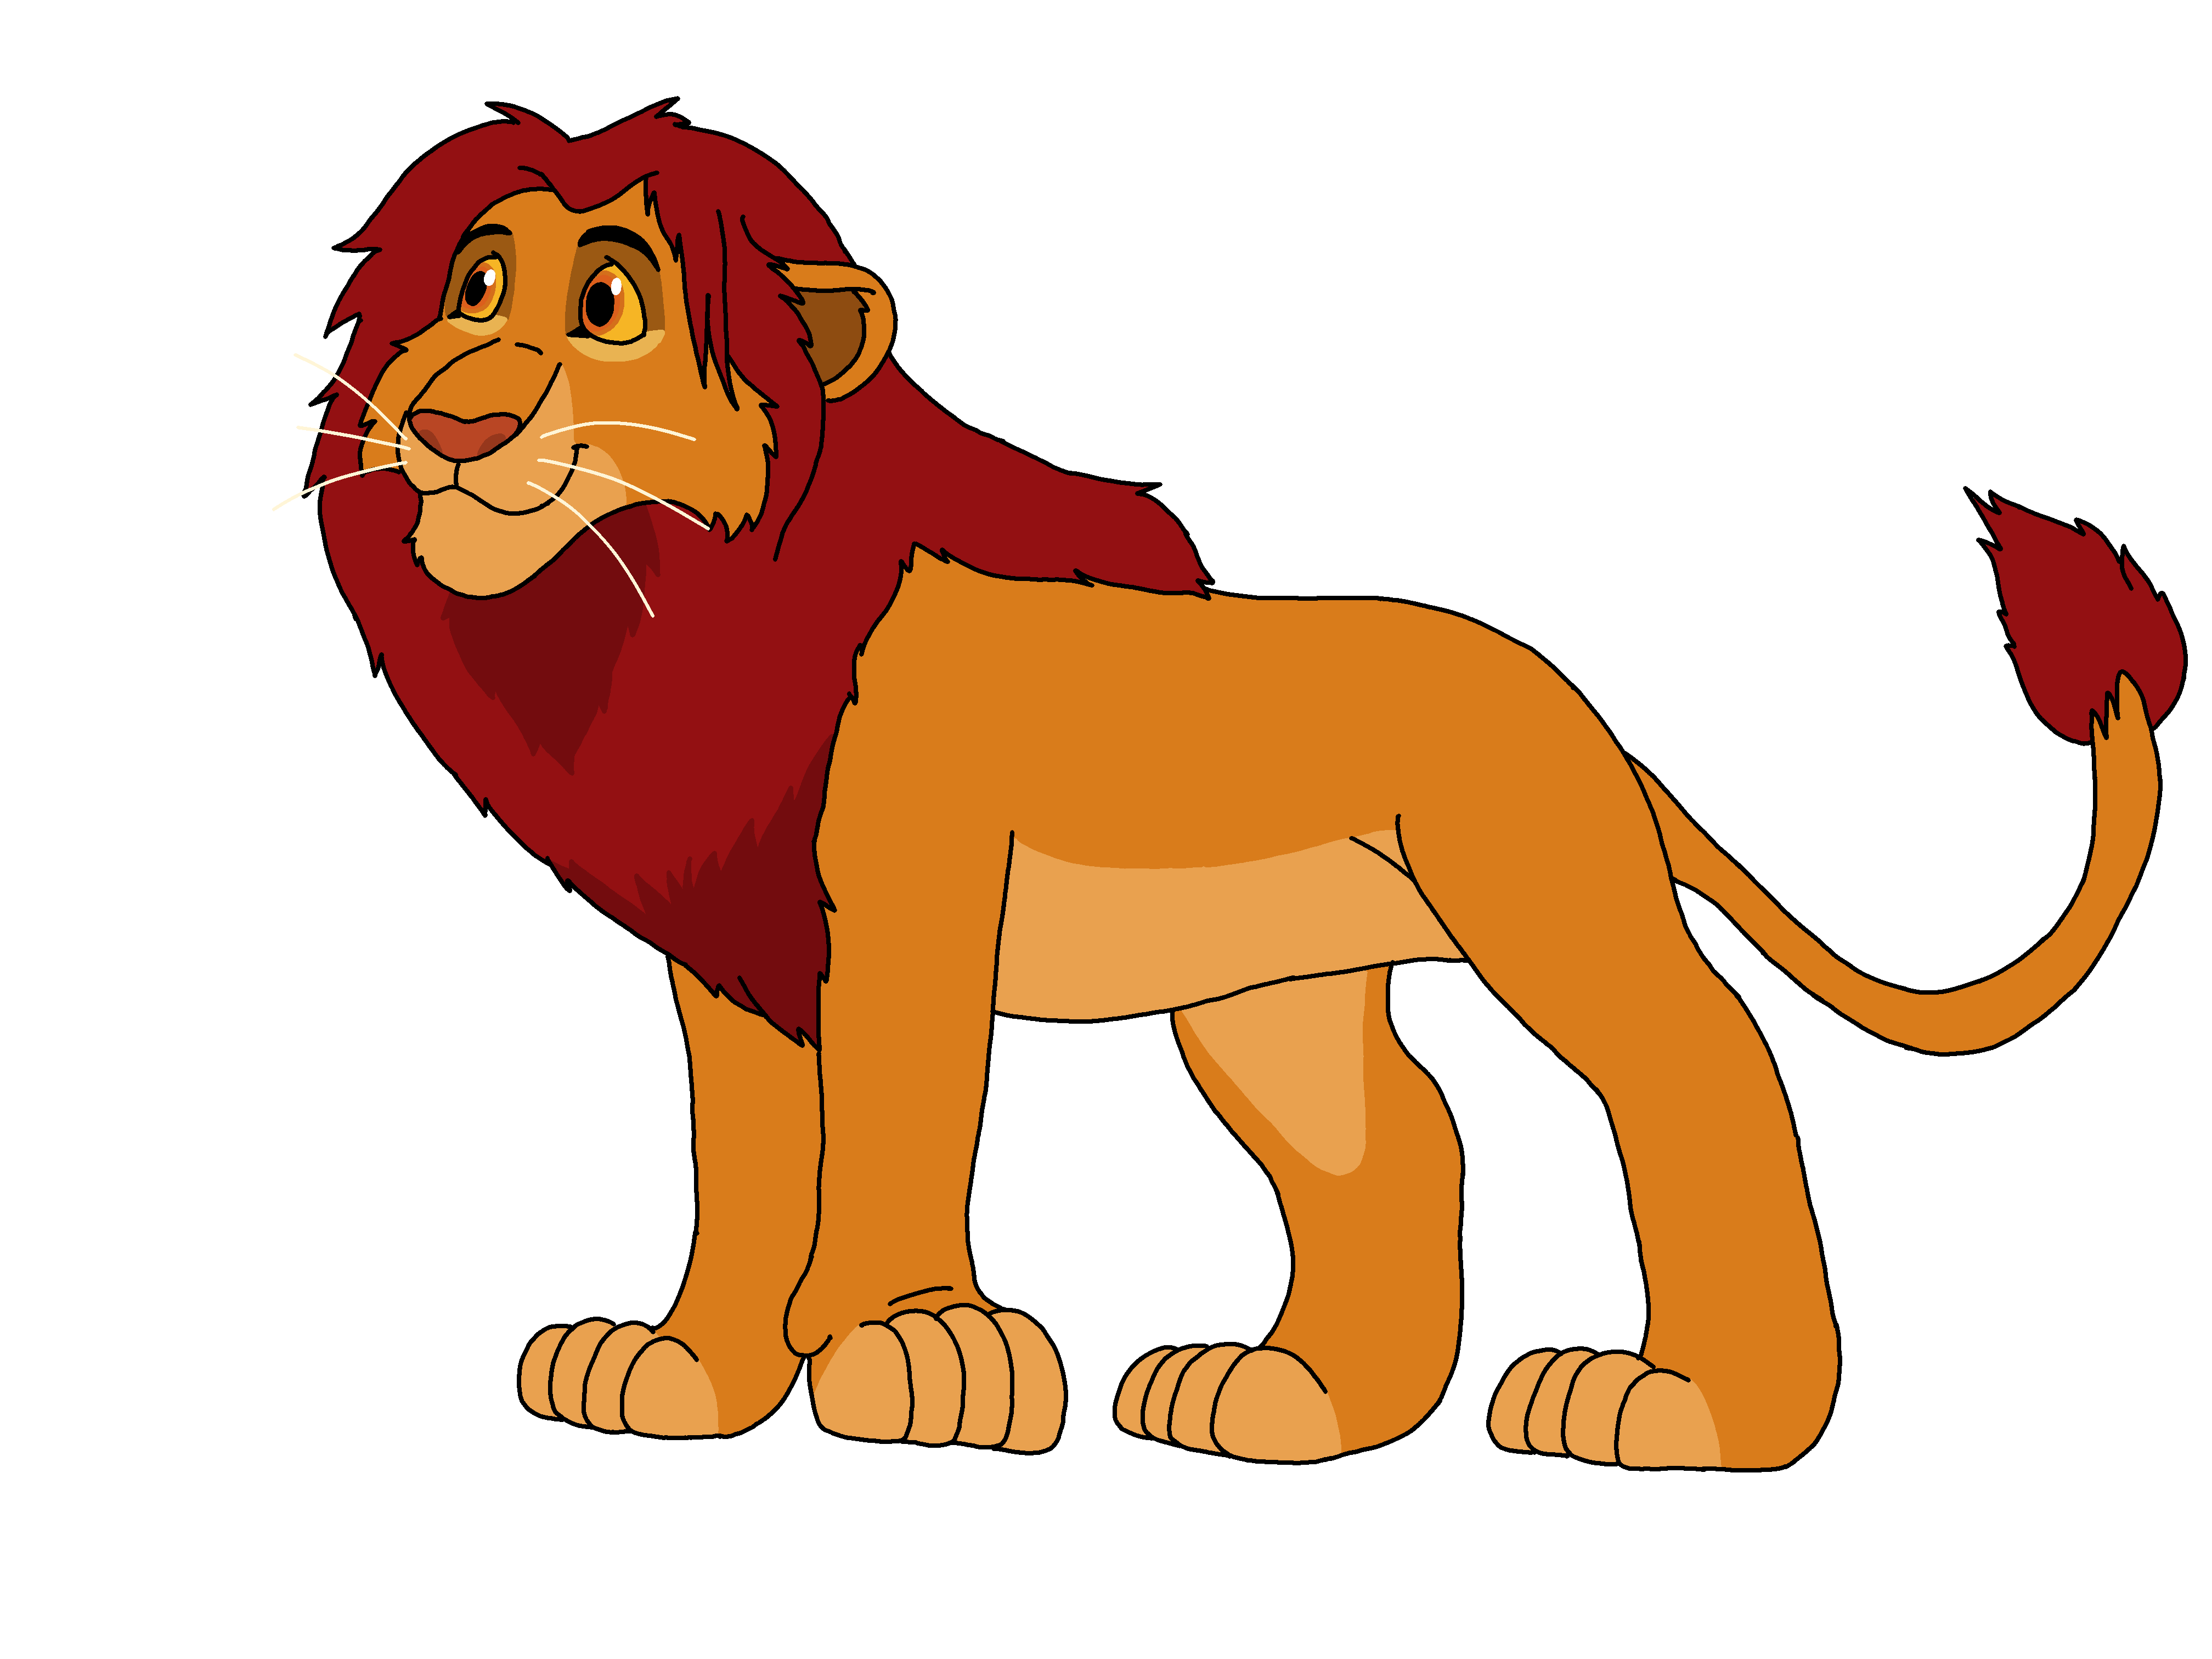 Disney 100 Collab- Simba by LionAdventuresArt on DeviantArt